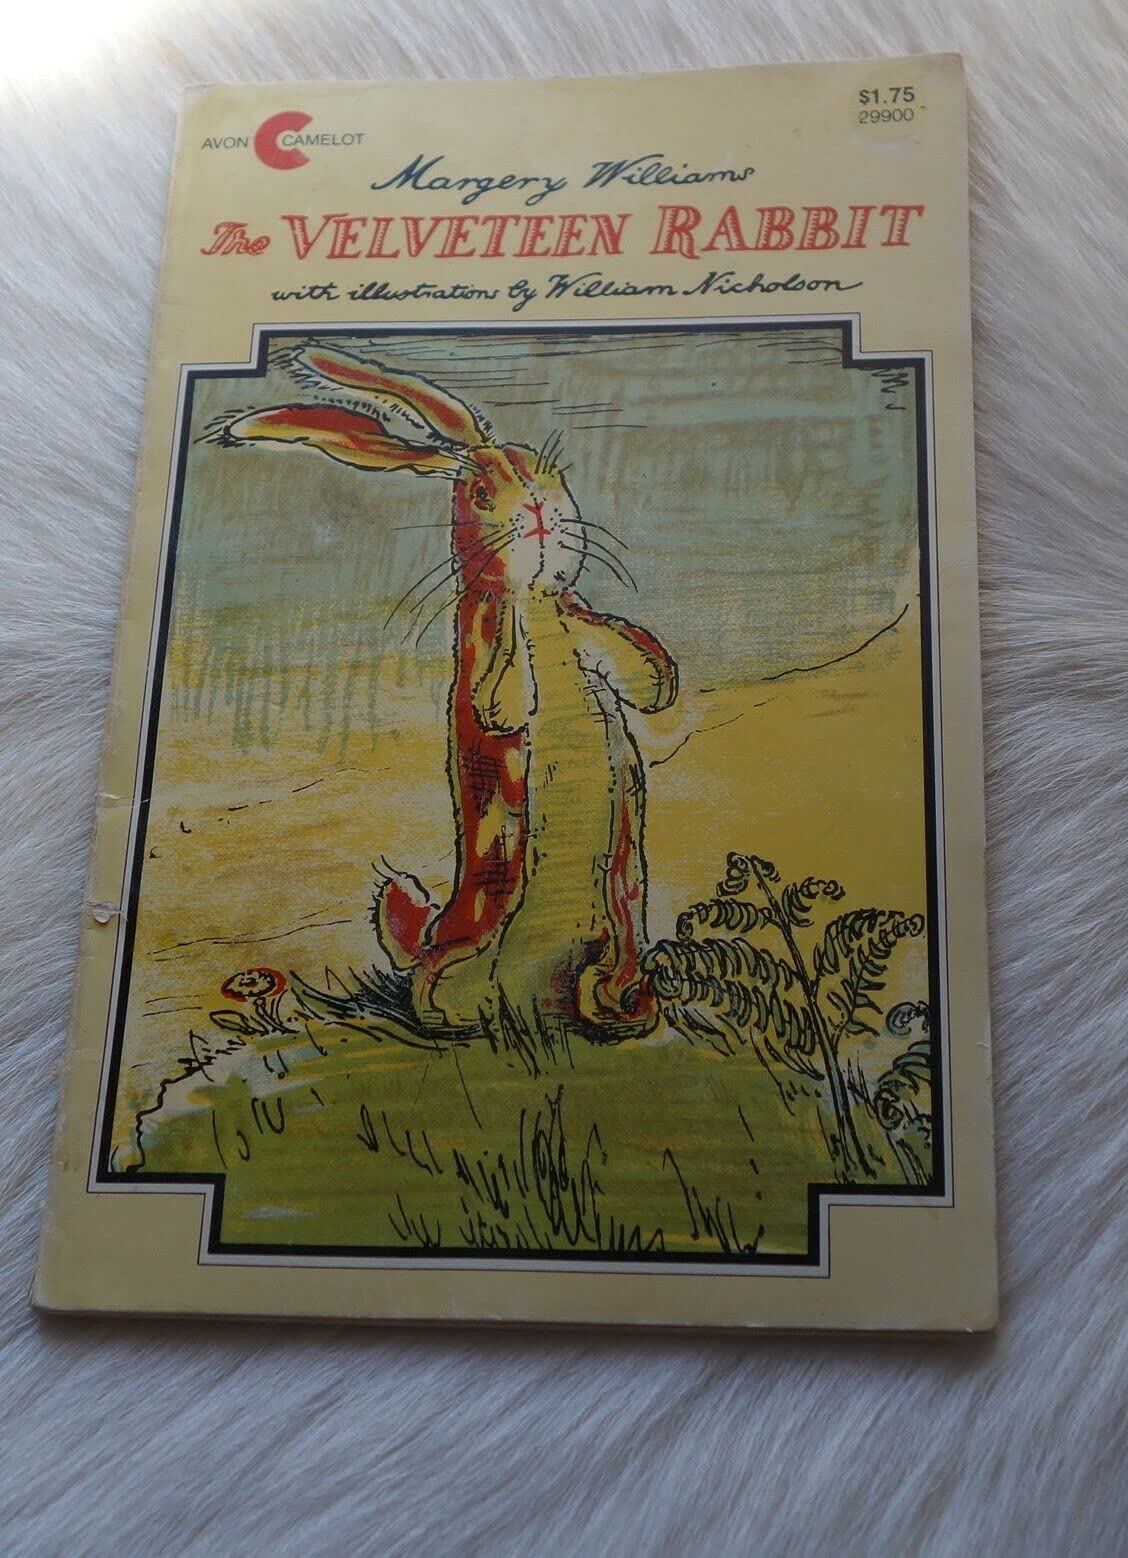 The Velveteen Rabbit: An Easter And Springtime Book For Kids